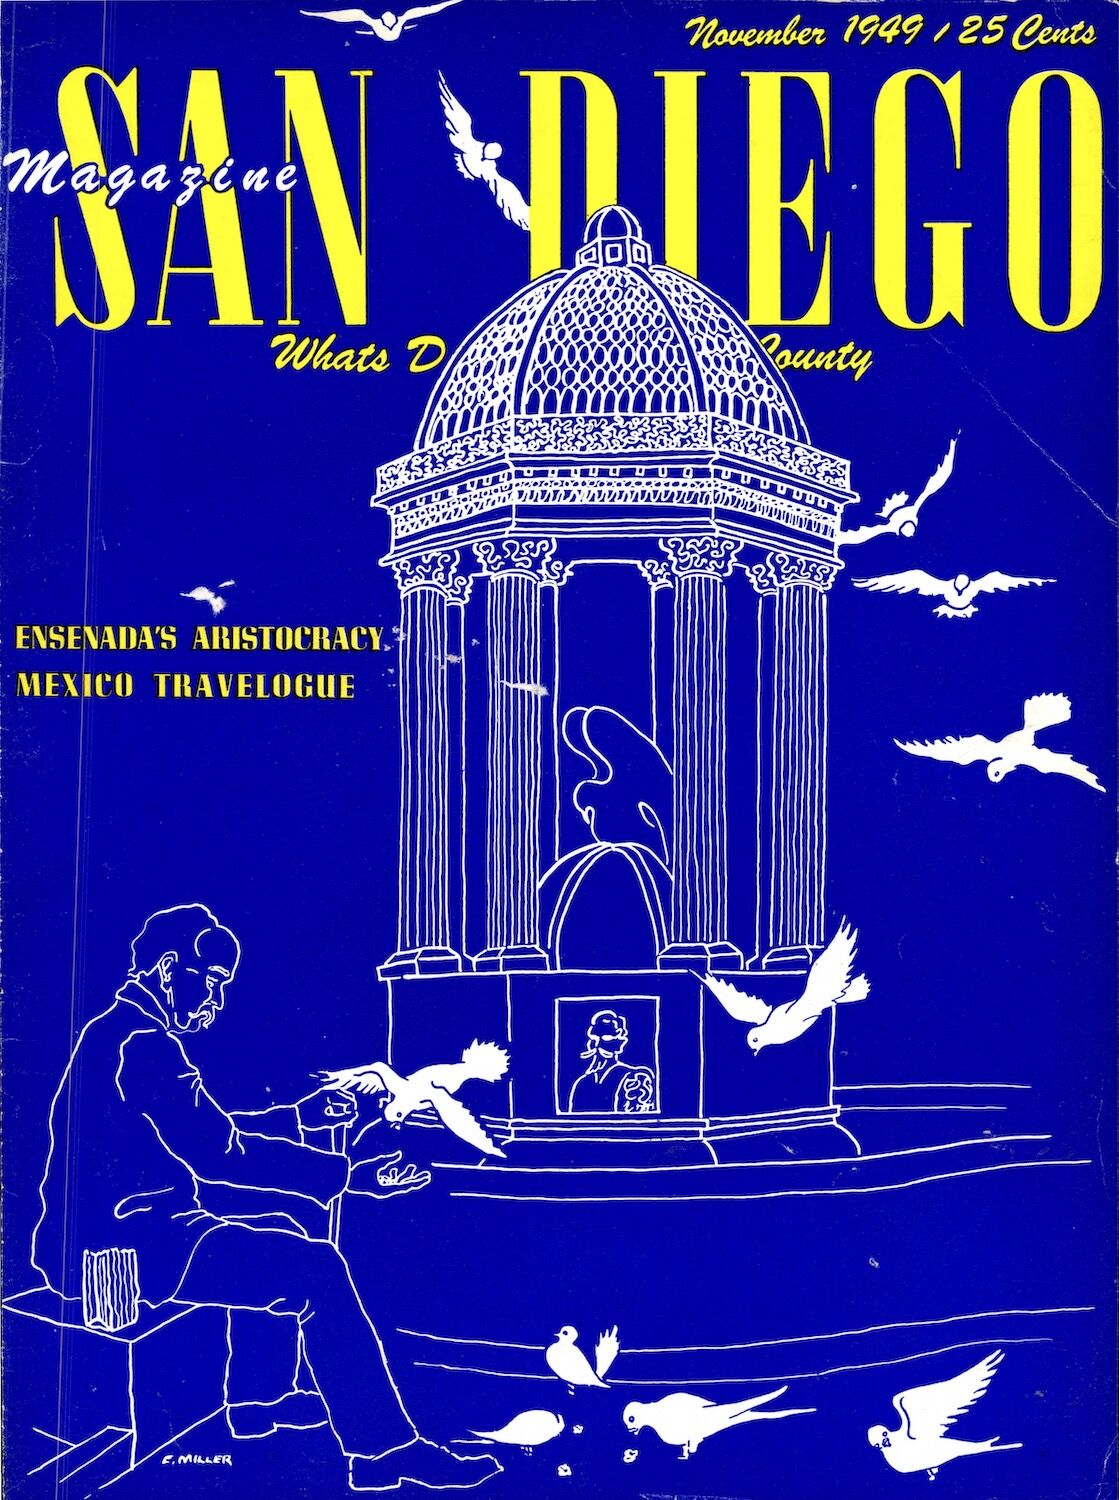 November 1949 San Diego Magazine Cover